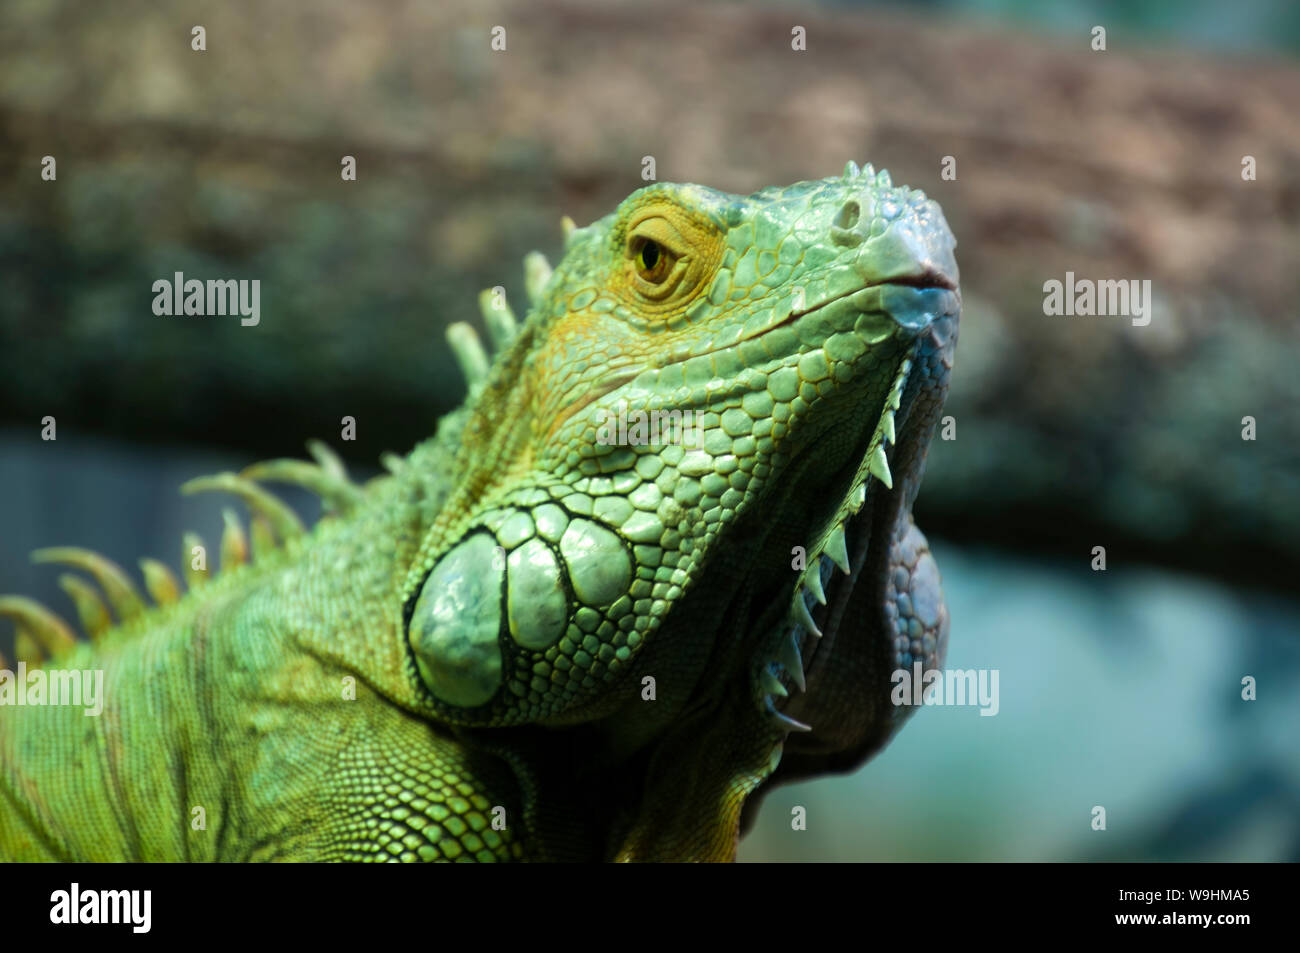 Sydney Australia, face of a green iguana Stock Photo